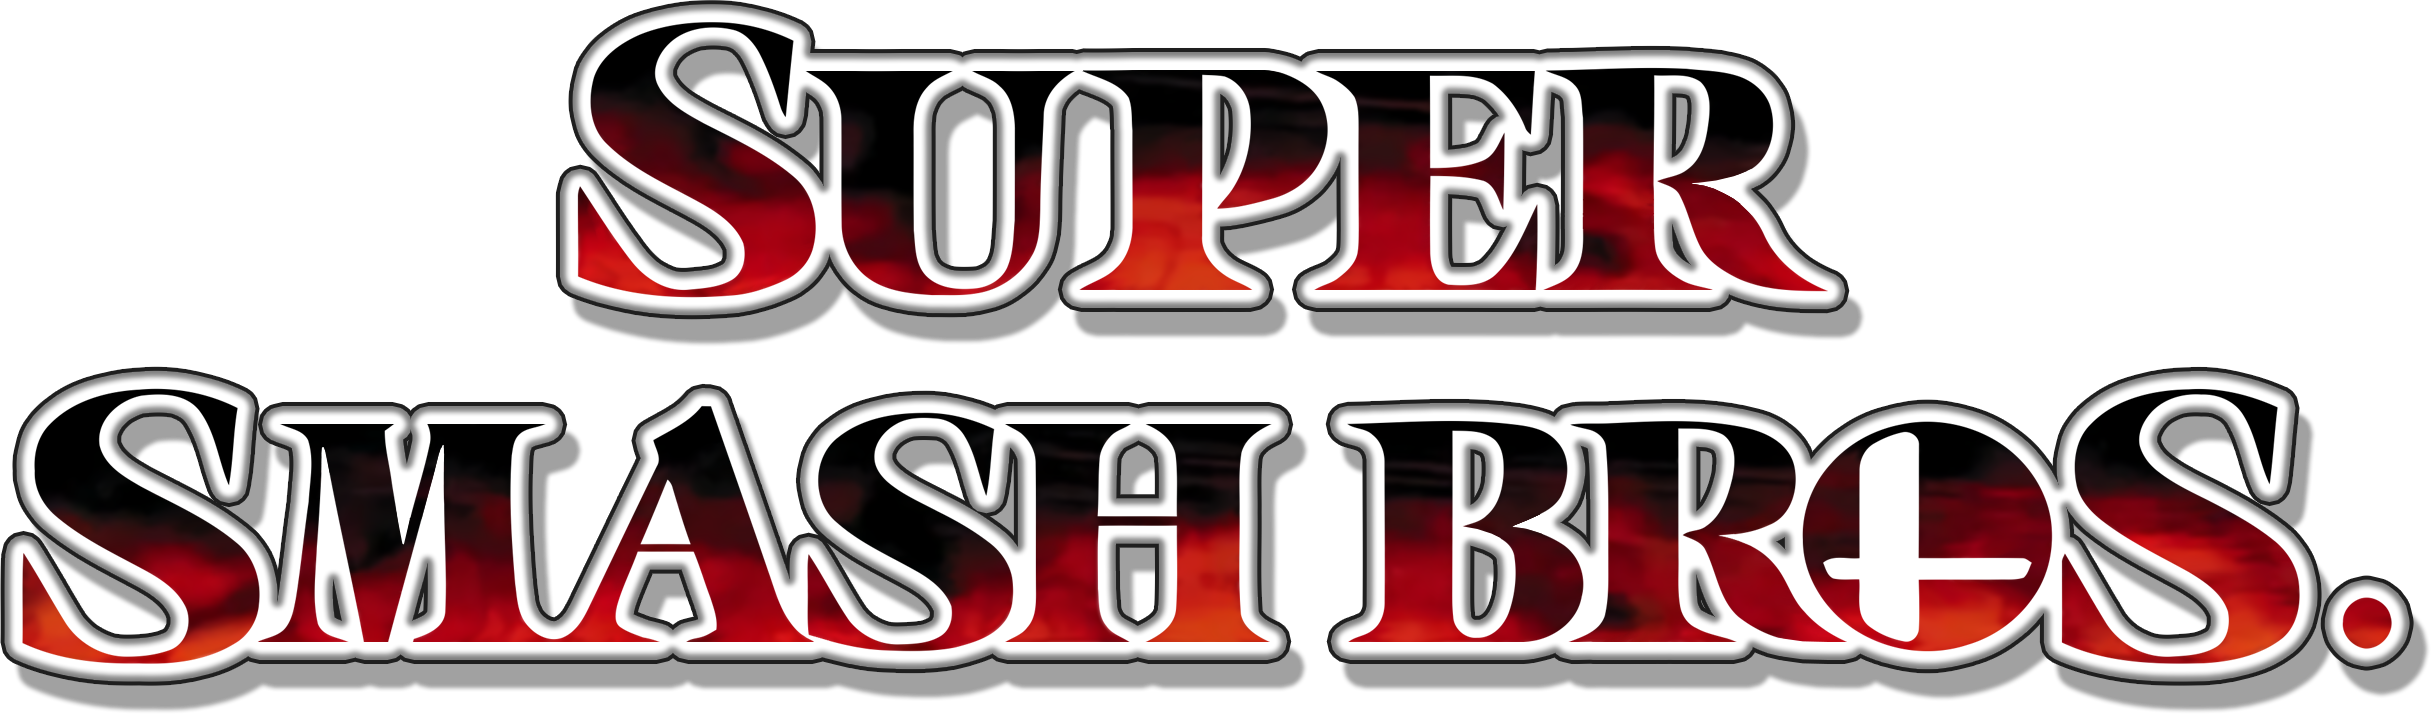 Super_Smash_Bros_Melee_series_logo.png